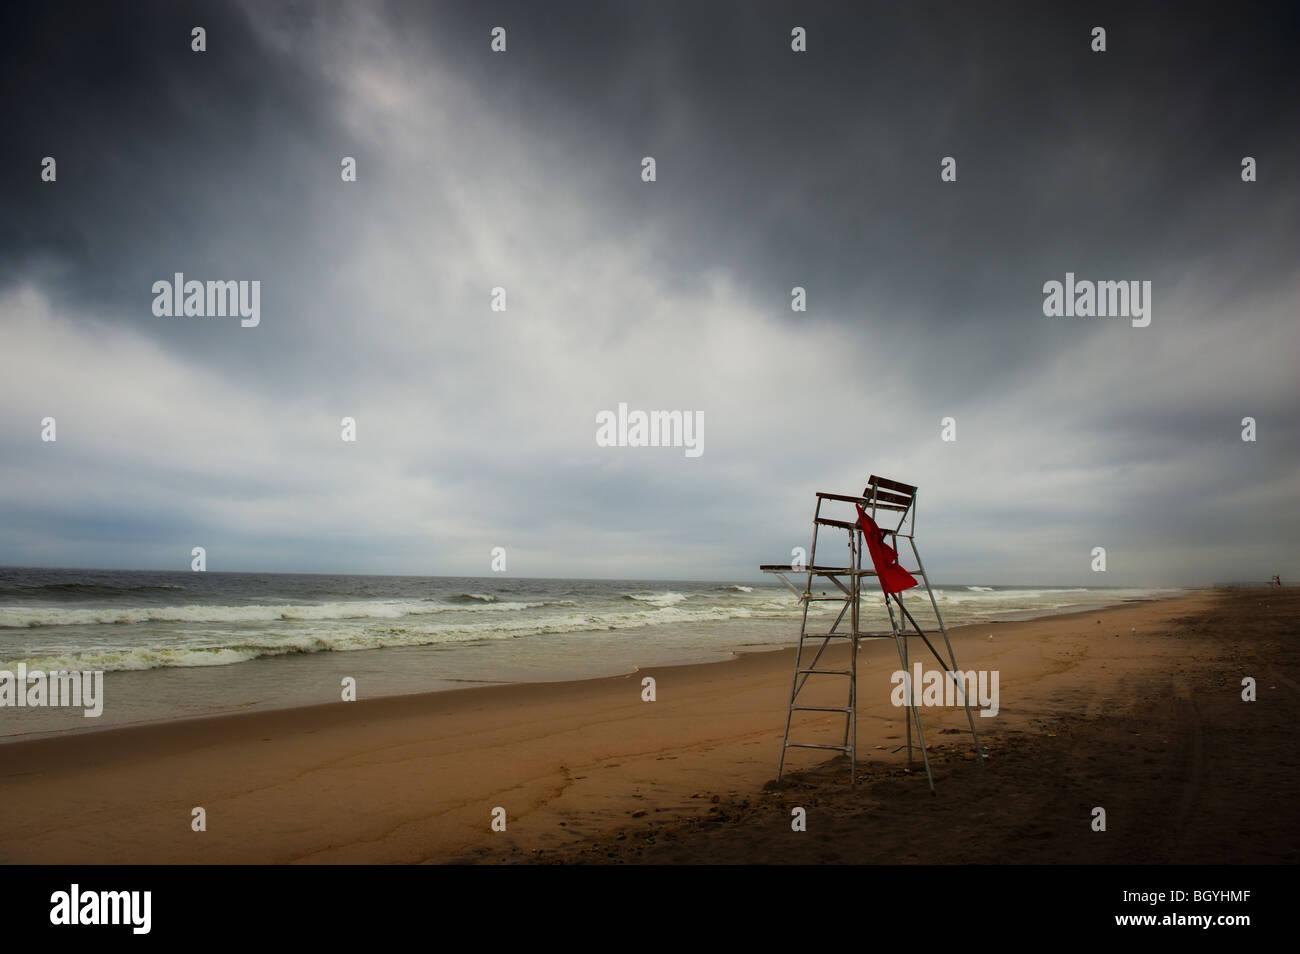 Lifeguard chair on beach Stock Photo